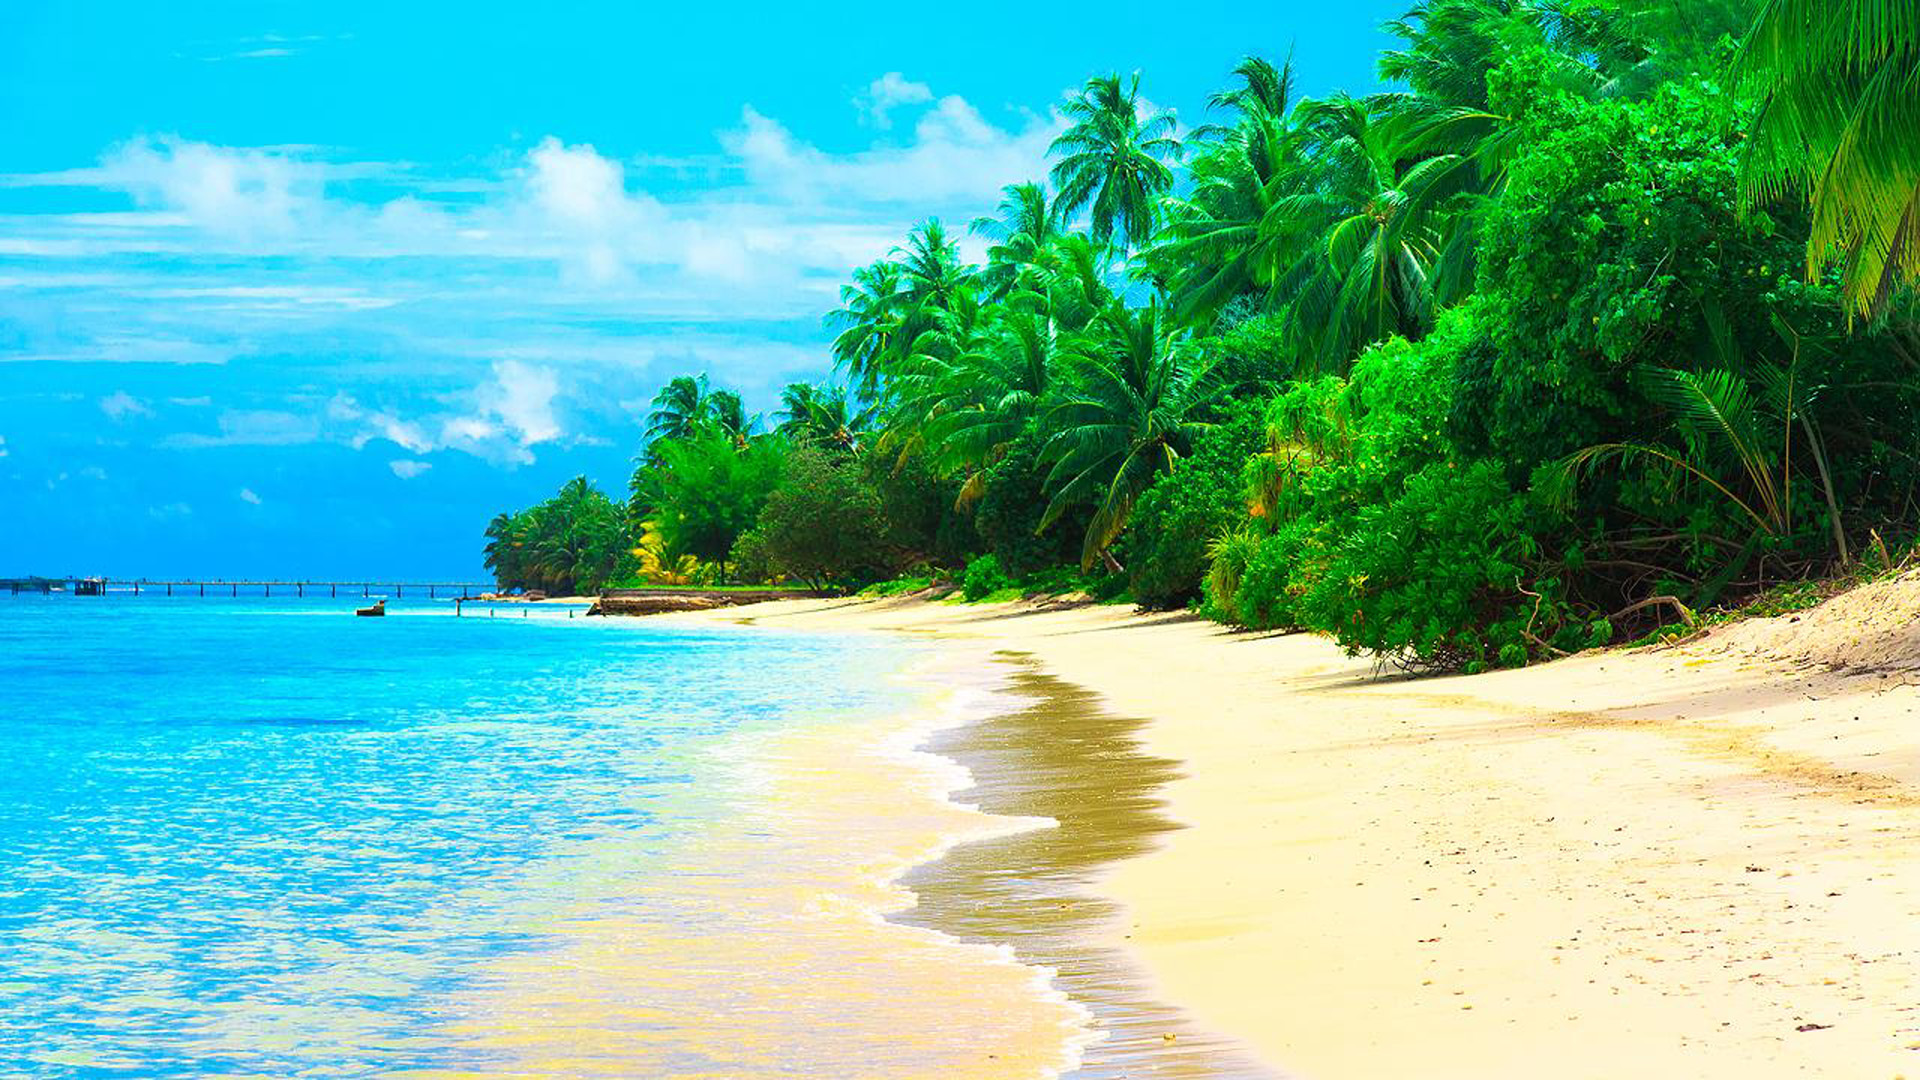 Maldives Summer Resort Sea Sandy Beach Coconut Trees Waves Desktop Wallpaper  Hd 1920x1080 : 